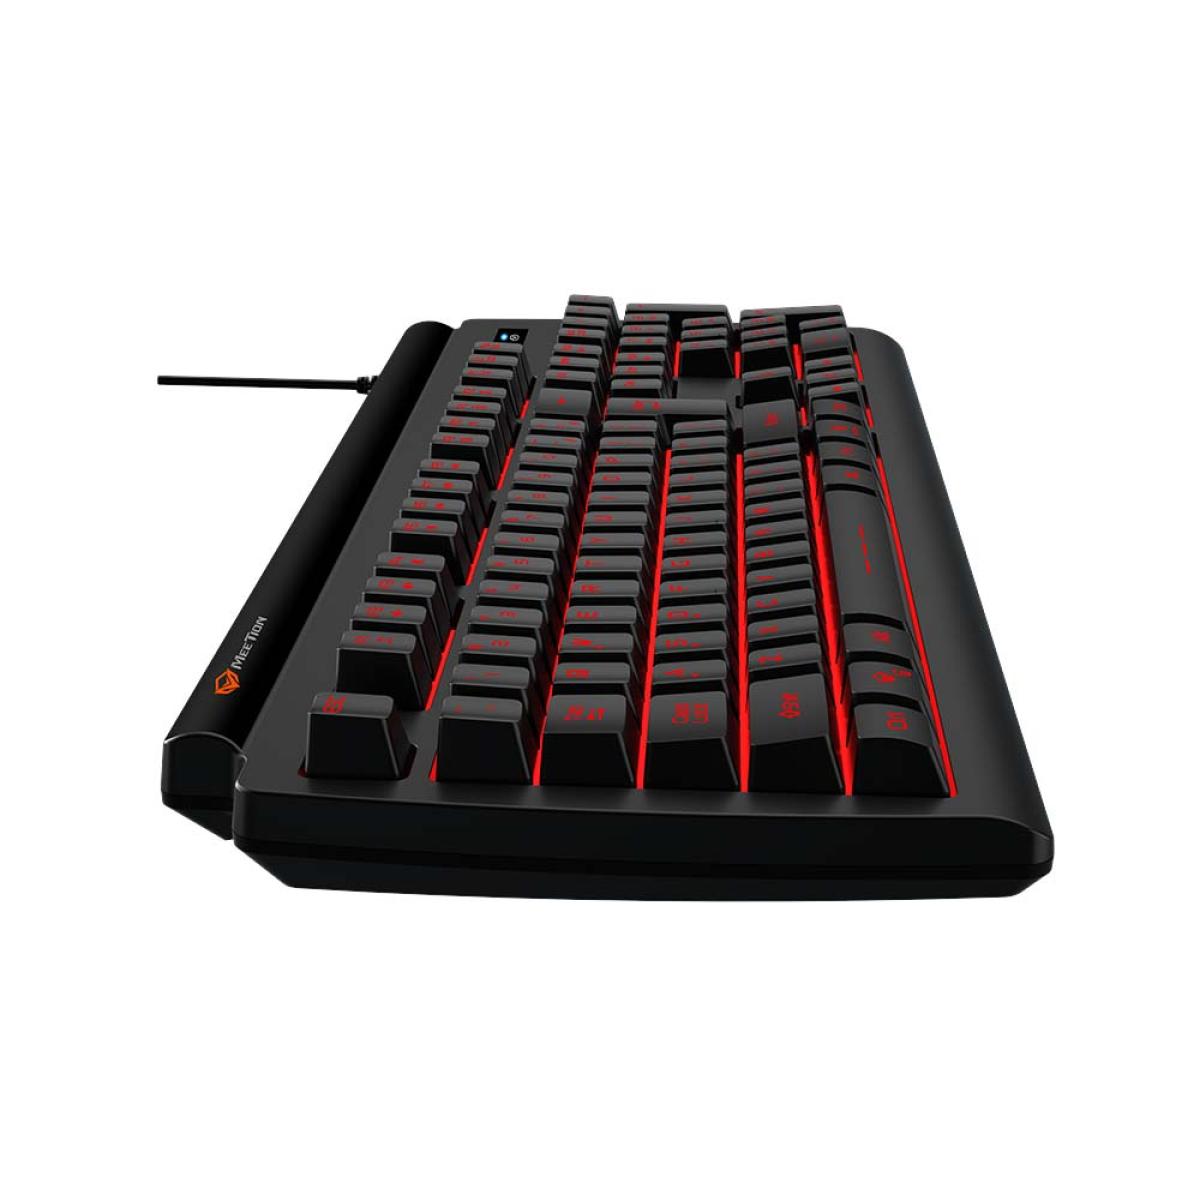 Meetion USB Backlit Gaming Keyboard - Black